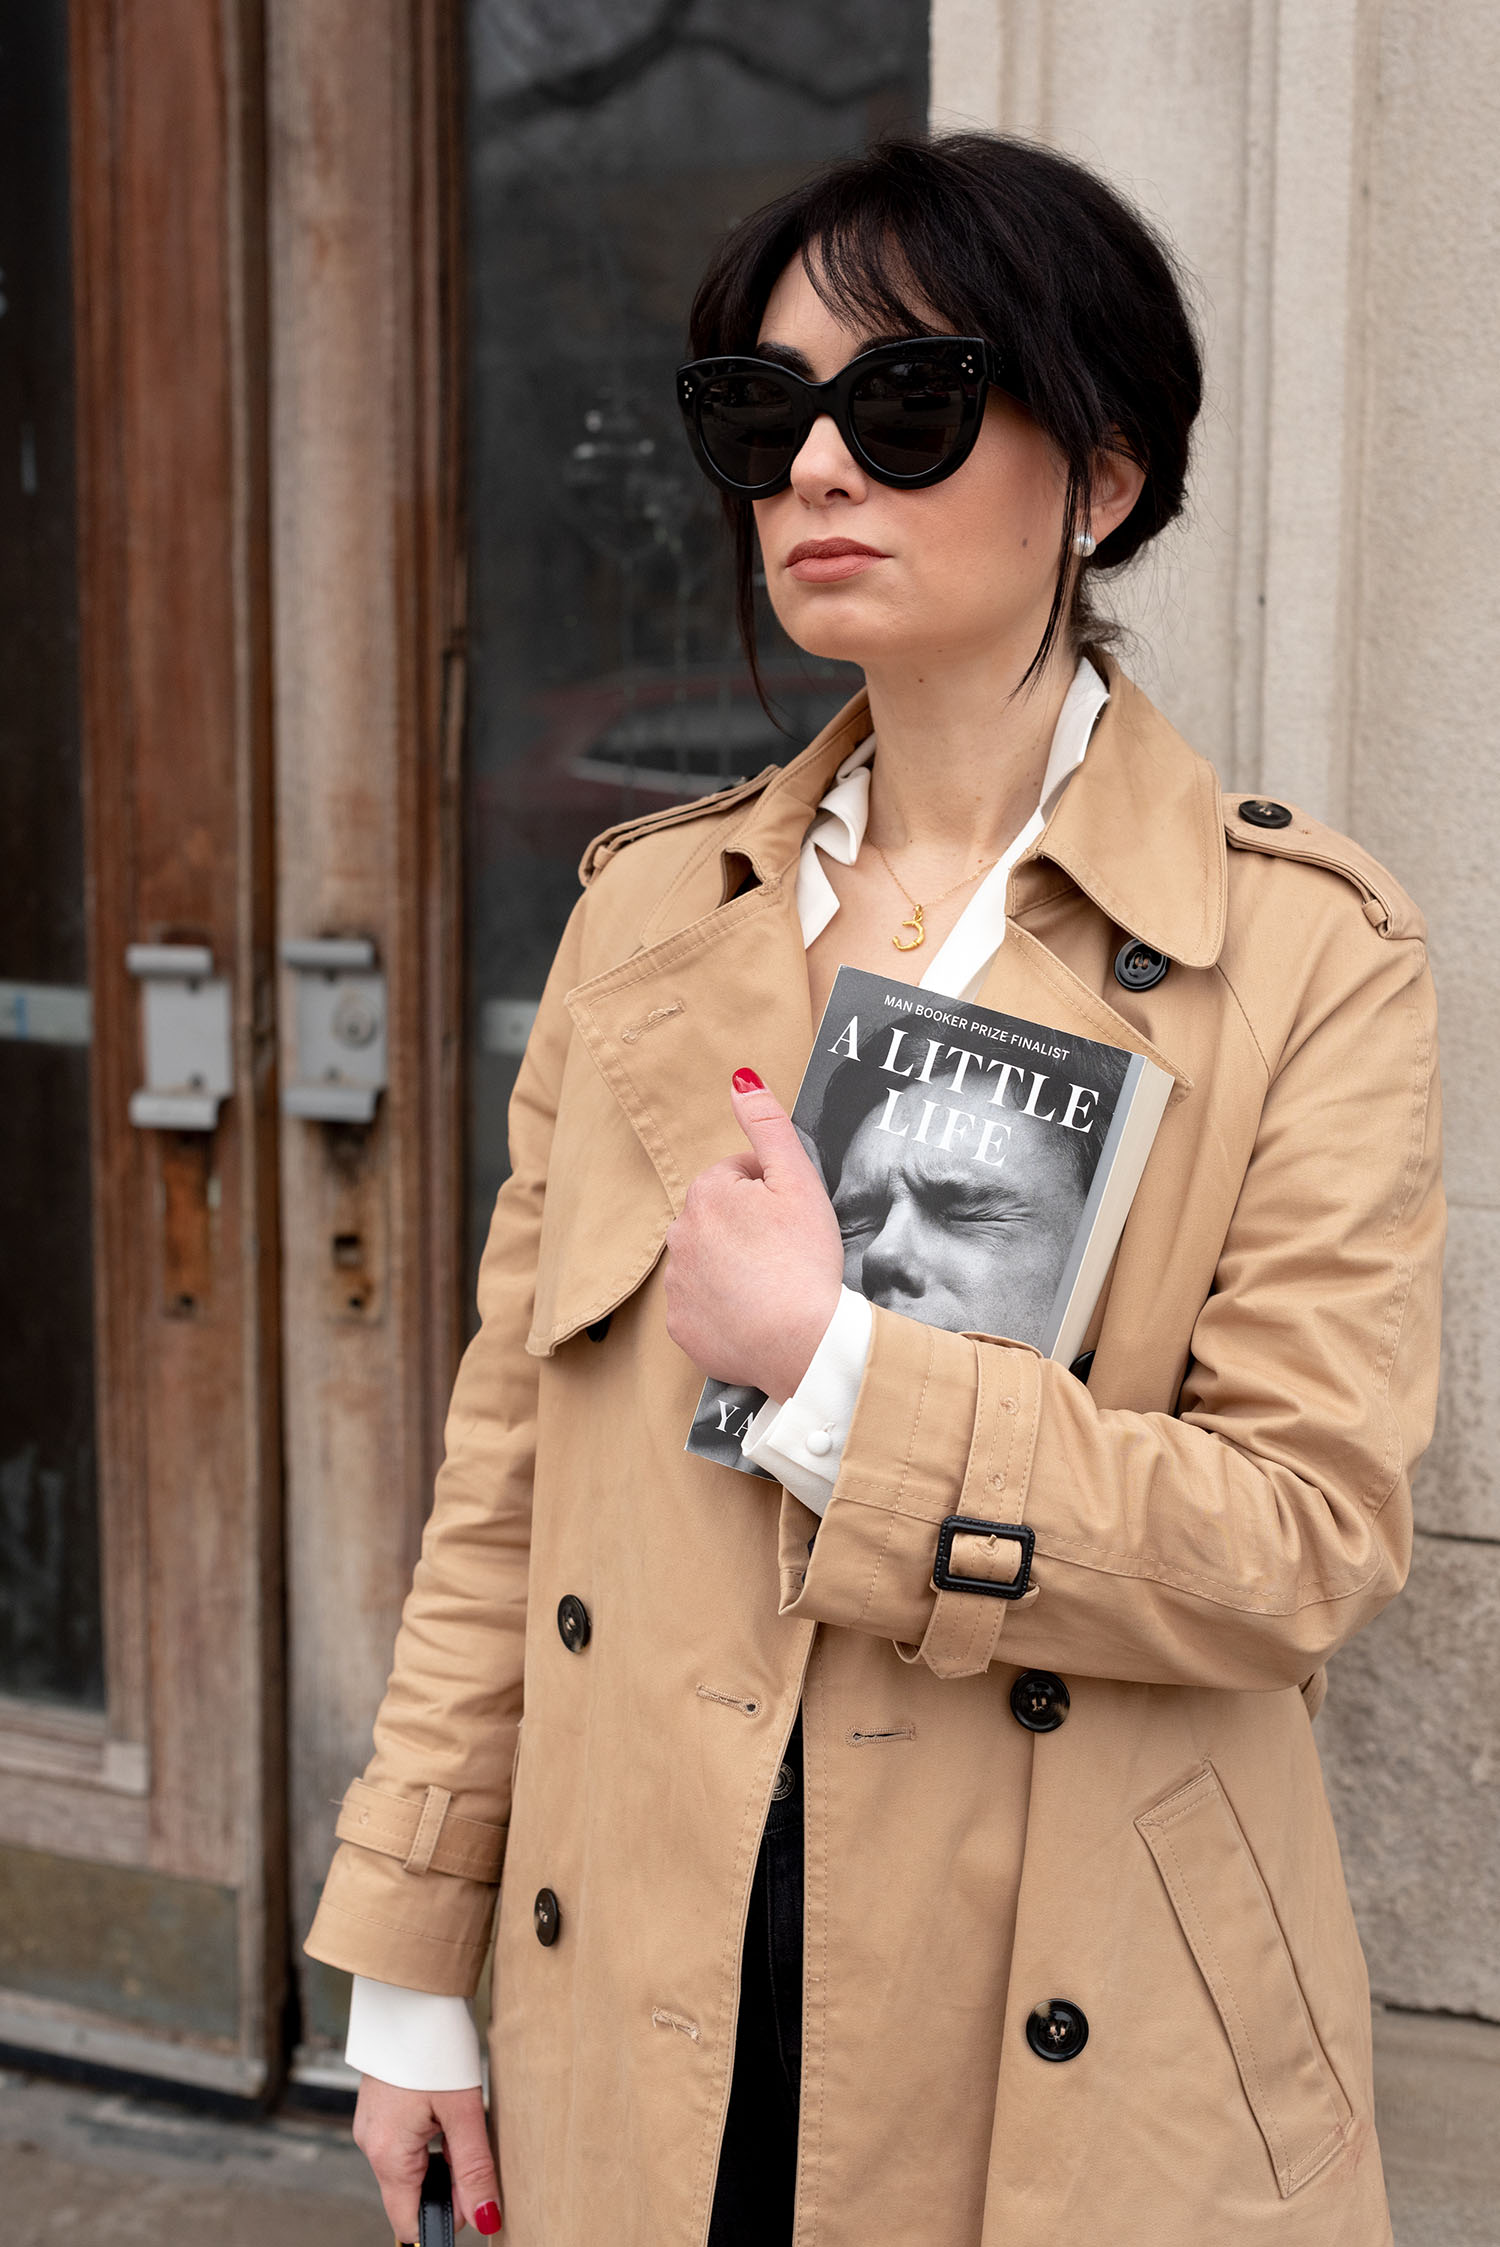 Coco & Voltaire - Celine Audrey sunglasses, Maris Pearl Co. earrings, Mango trench coat